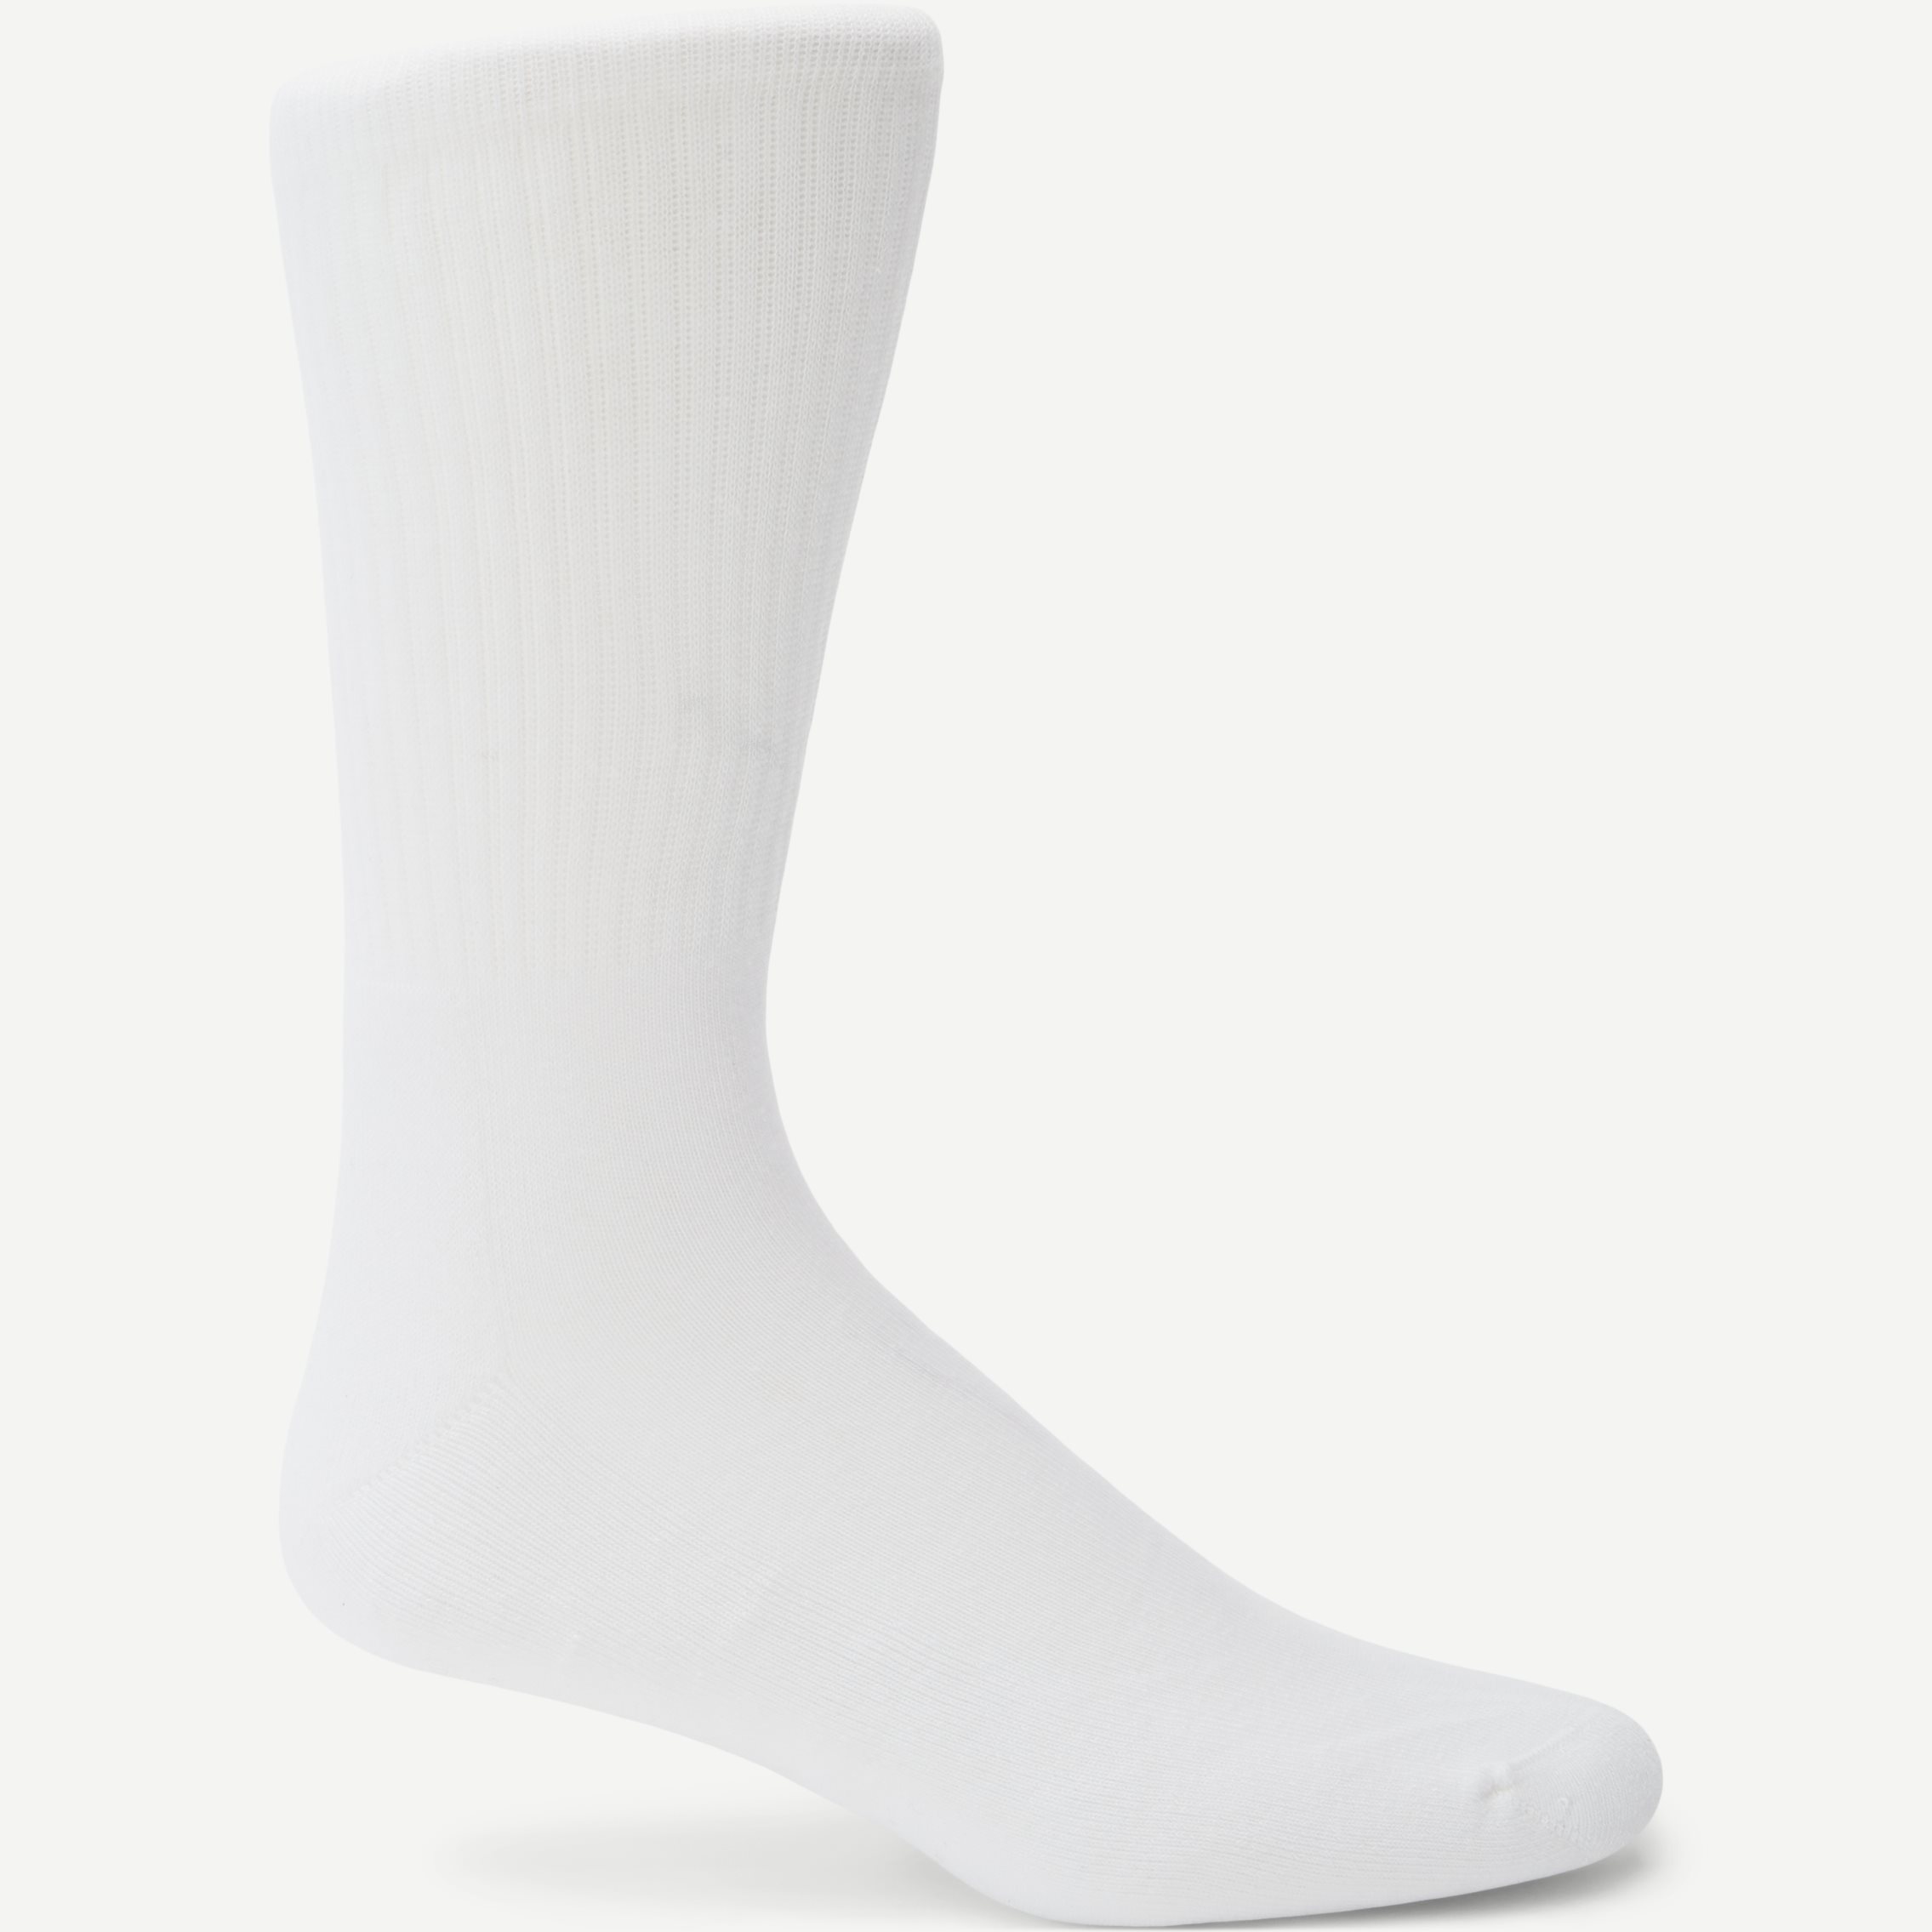 Simple Socks Socks TENNIS White